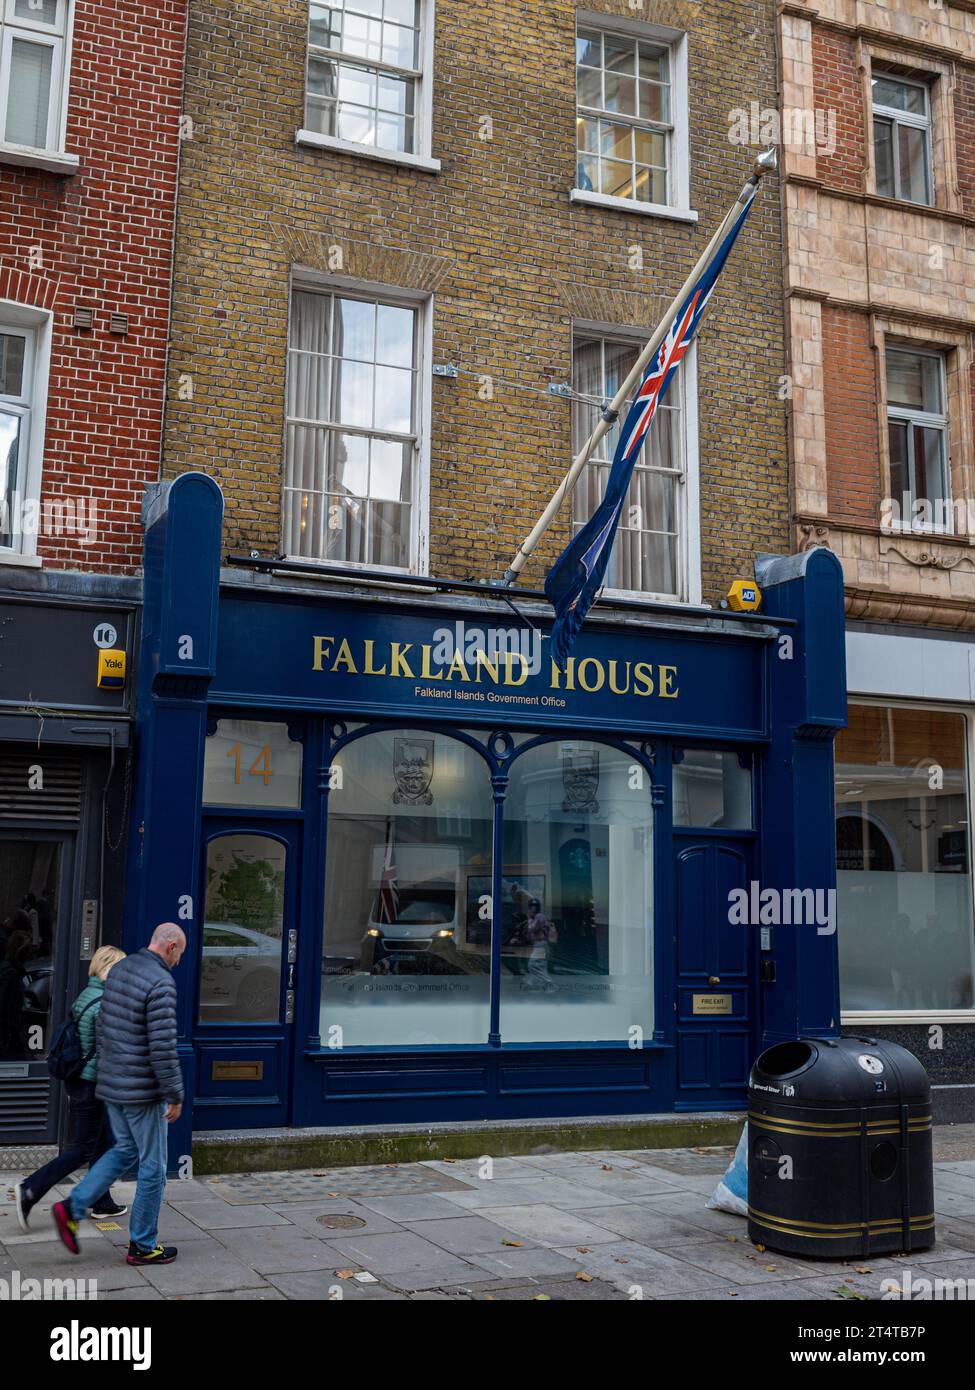 Falkland House London ist das Falkland Islands Government Office (FIGO) in London. Eröffnung 1983. Das Hotel befindet sich am Broadway Westminster 14 London. Stockfoto